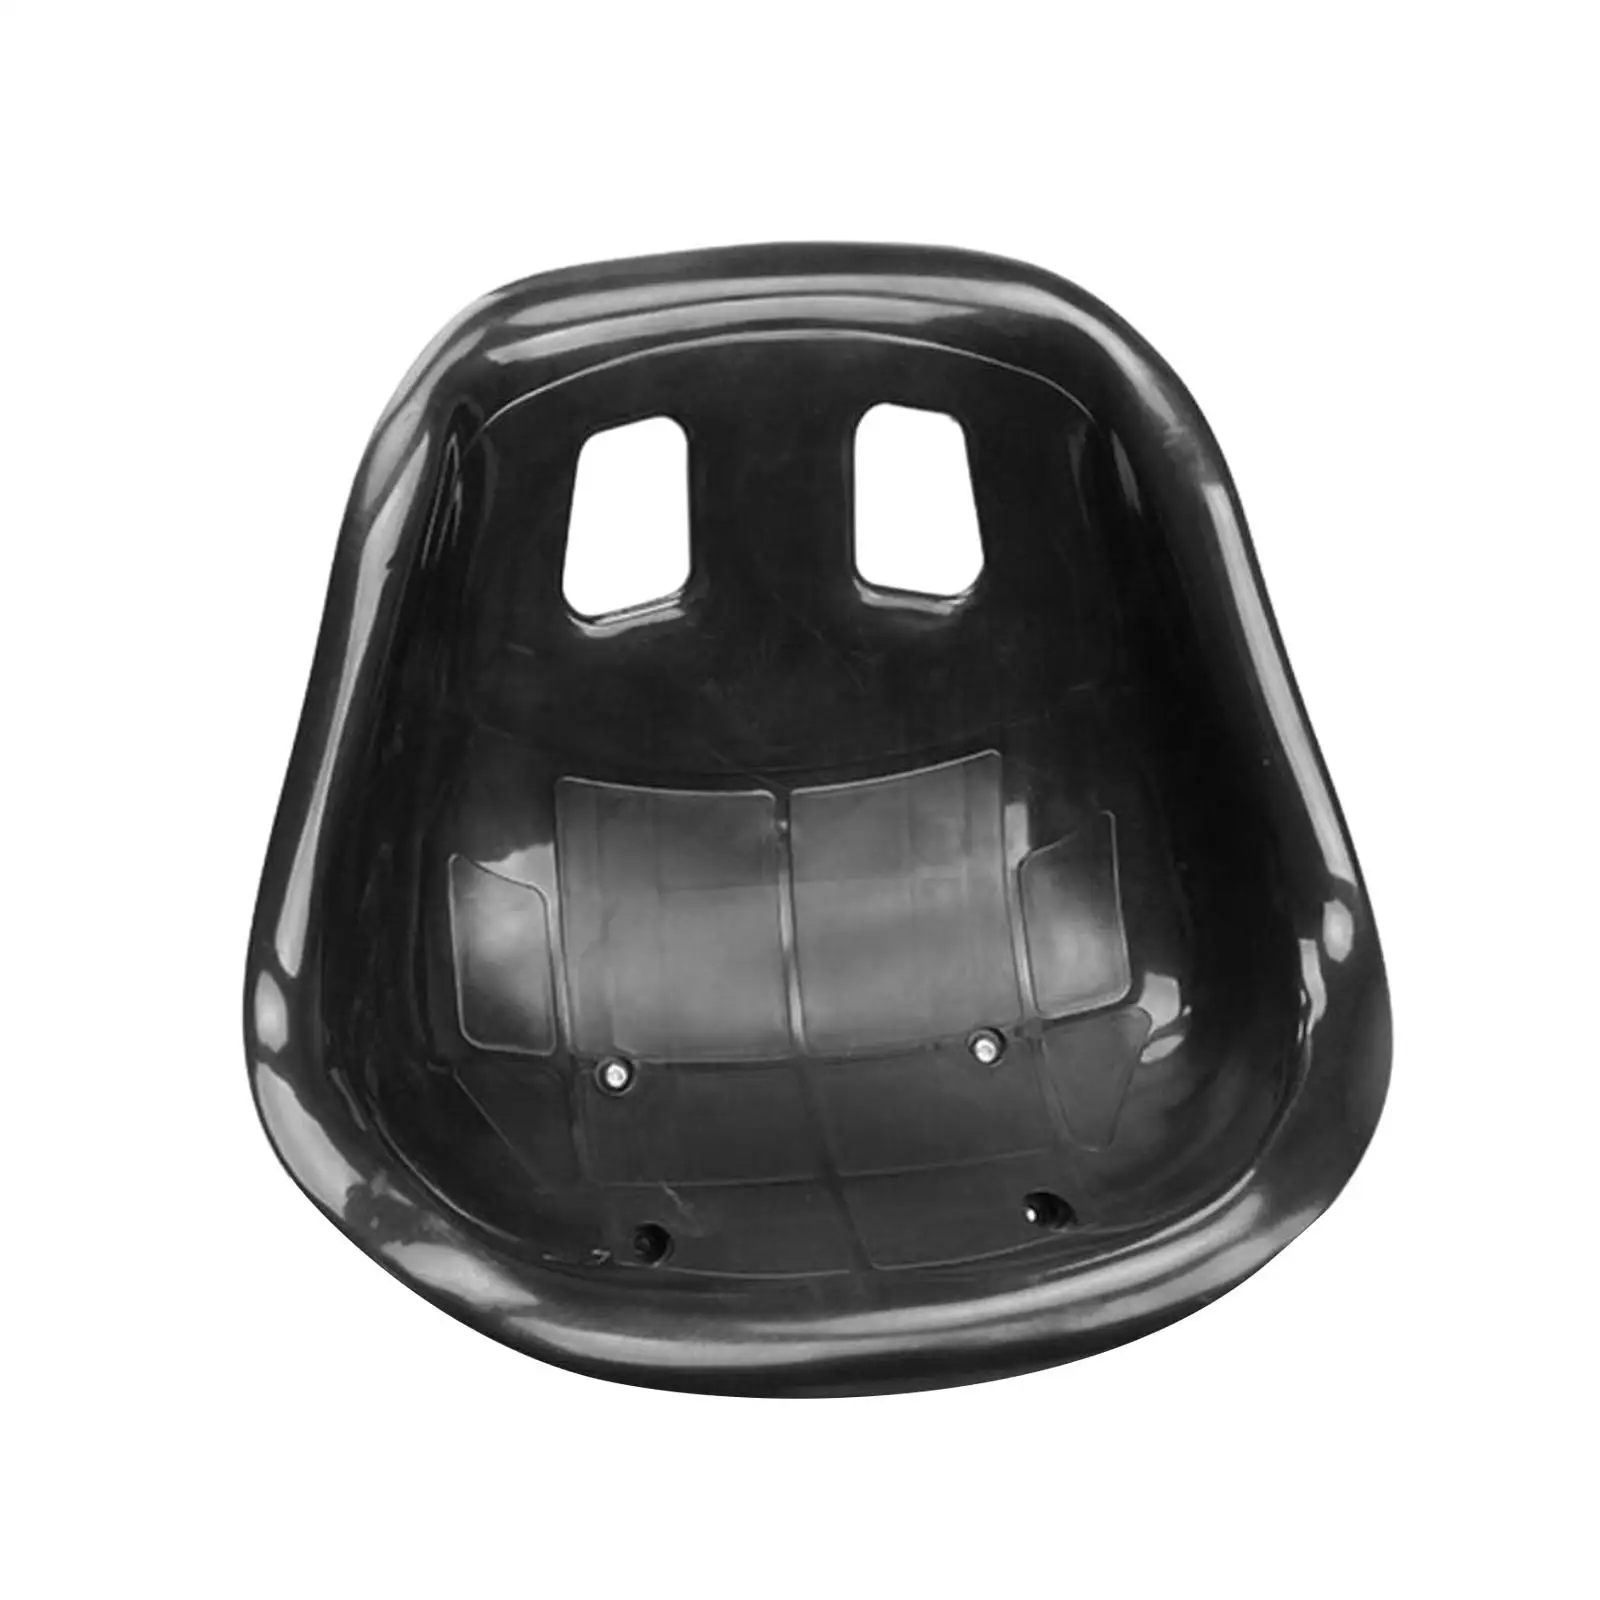 Go Kart Car Seat Black for Racing Balancing Vehicle Accessories Kart Go Seat